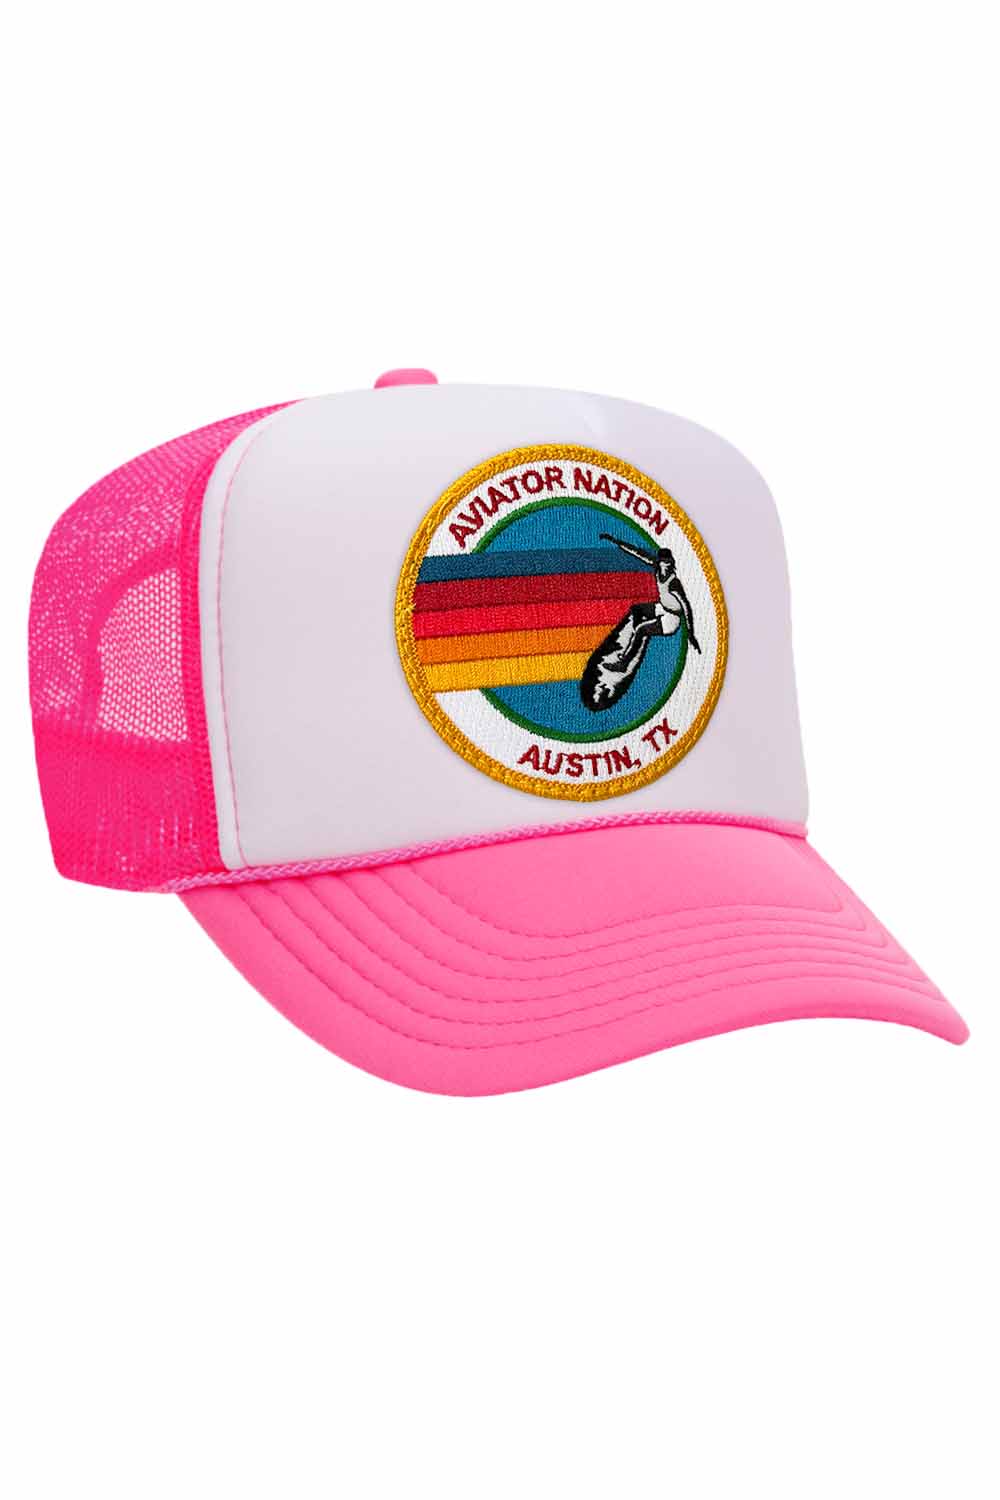 SIGNATURE AUSTIN TRUCKER HAT HATS Aviator Nation NEON PINK // WHITE // NEON PINK 